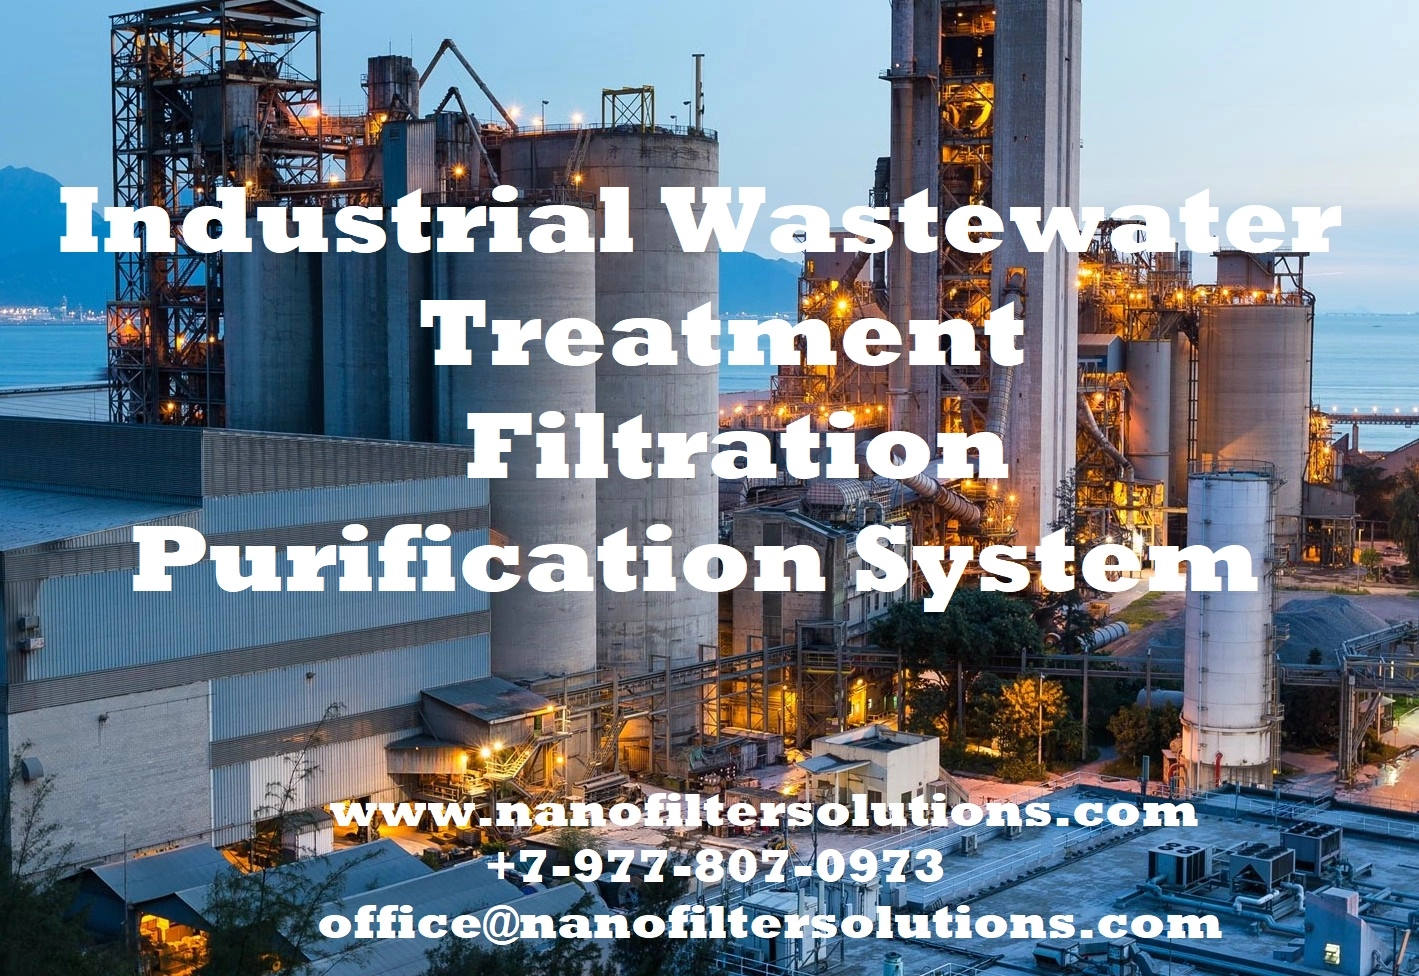 RU Industrial Water Treatment Filter For Powder Generation Plants